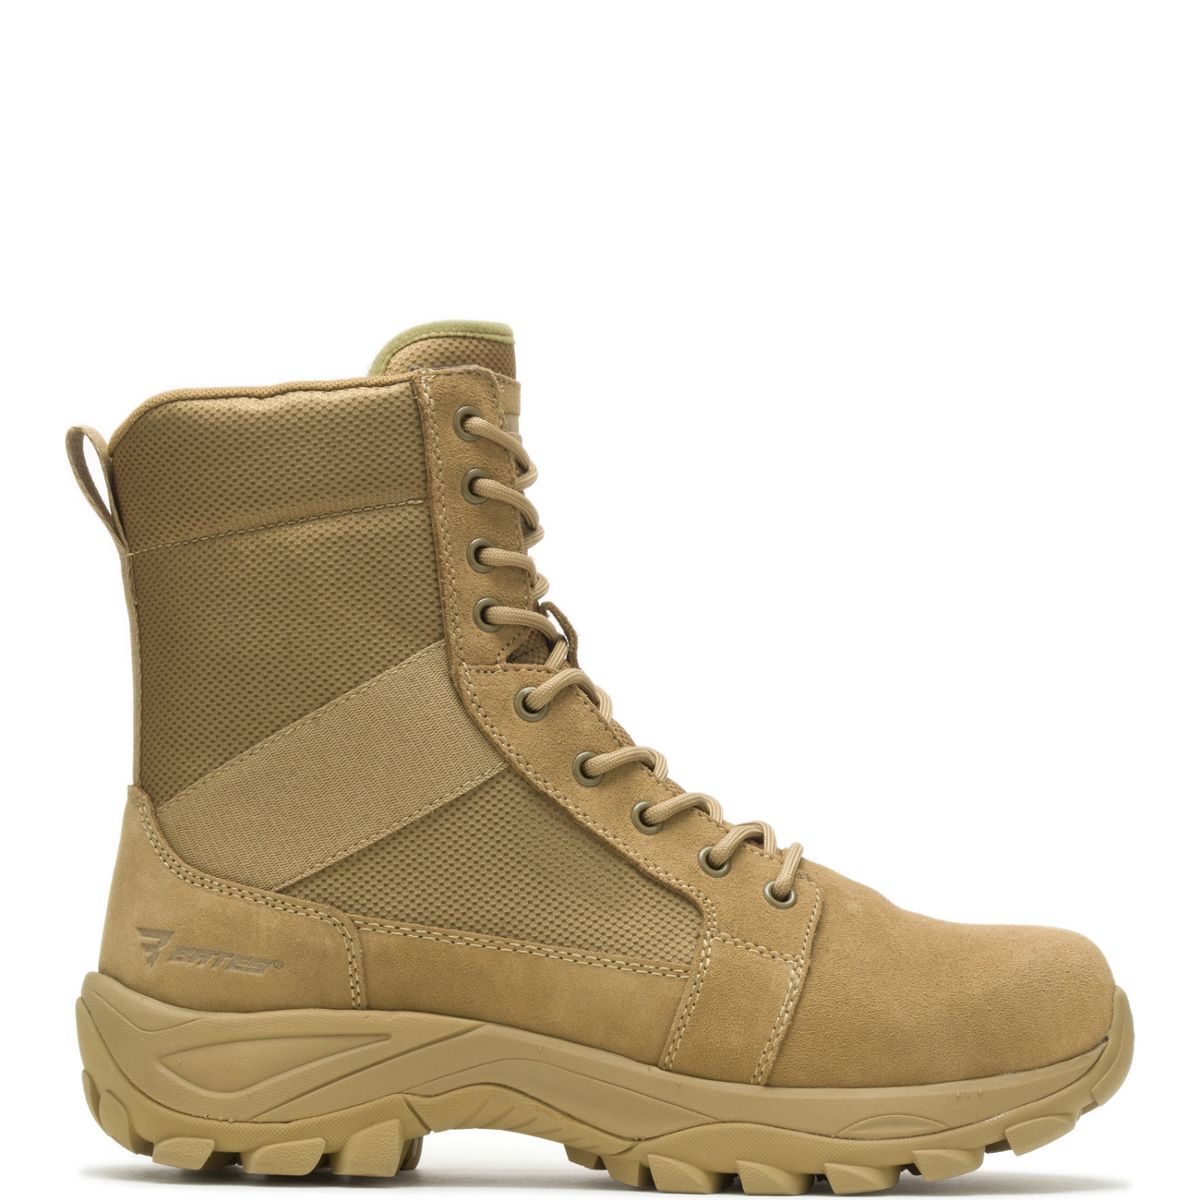 Bates Boots - Tactical, Military & Security Footwear | Bates